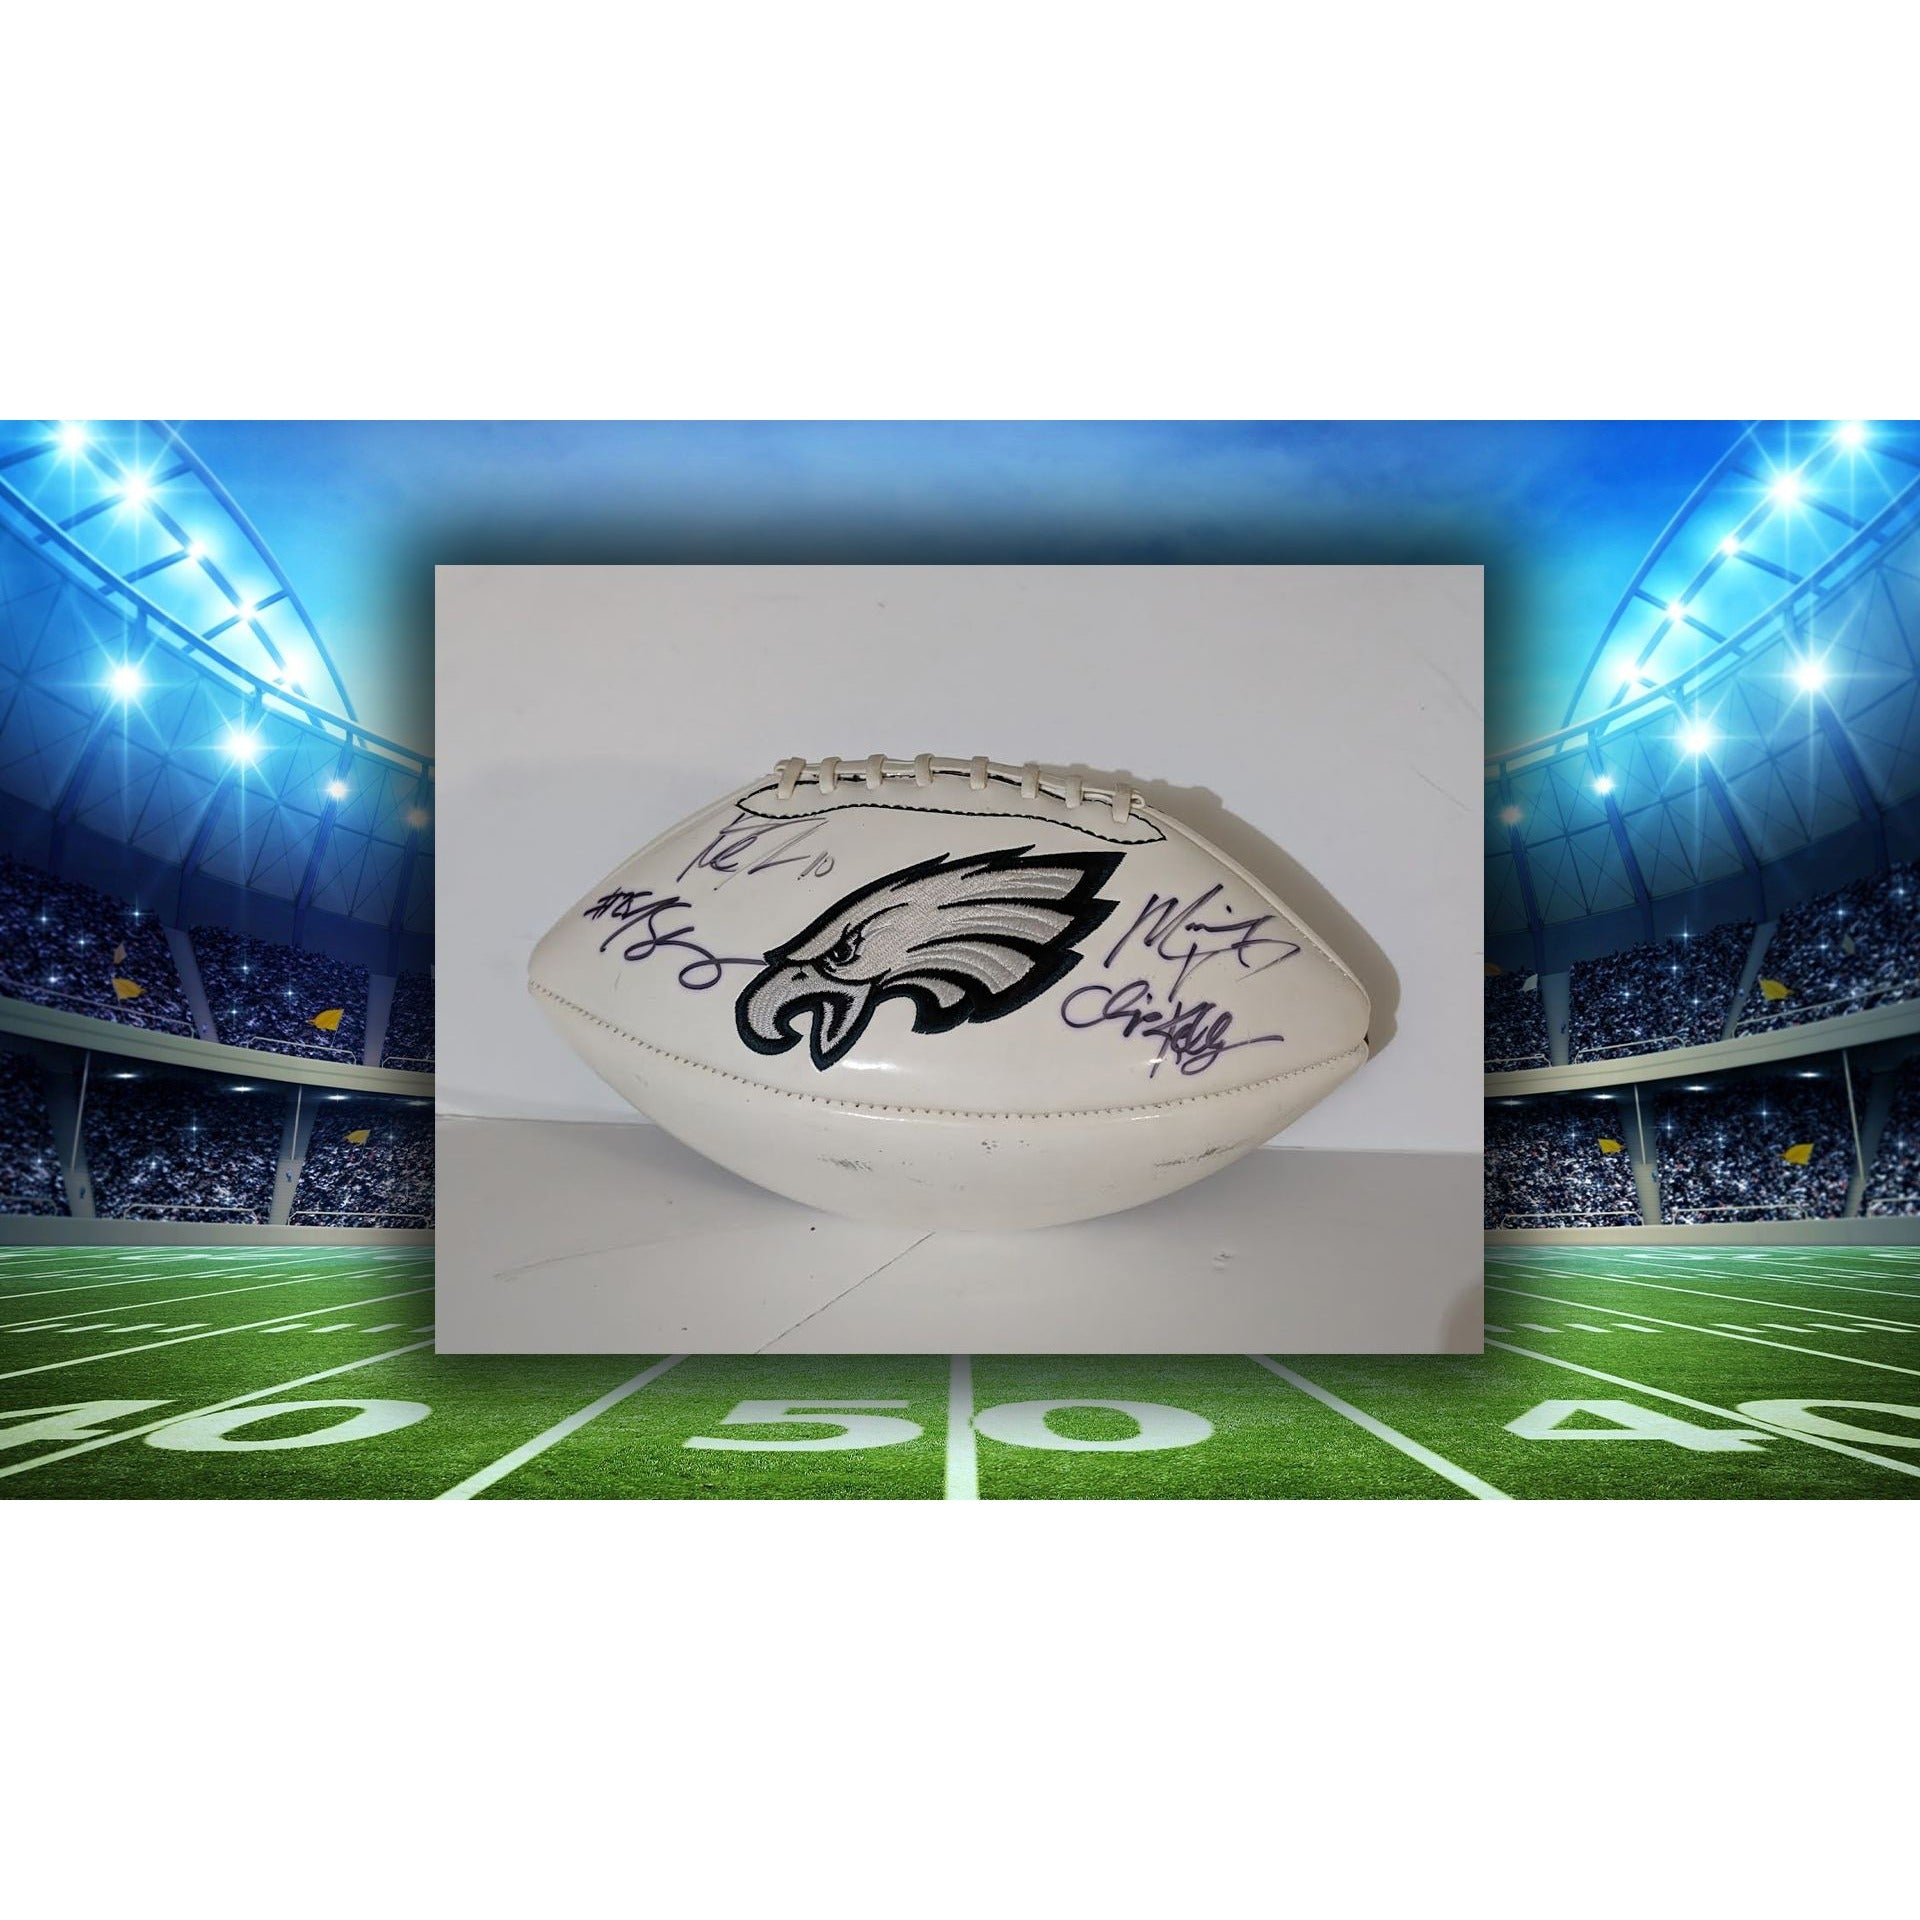 Philadelphia Eagles football Michael Vick LeSean McCoy DeSean Jackson Chip Kelly full size football signed